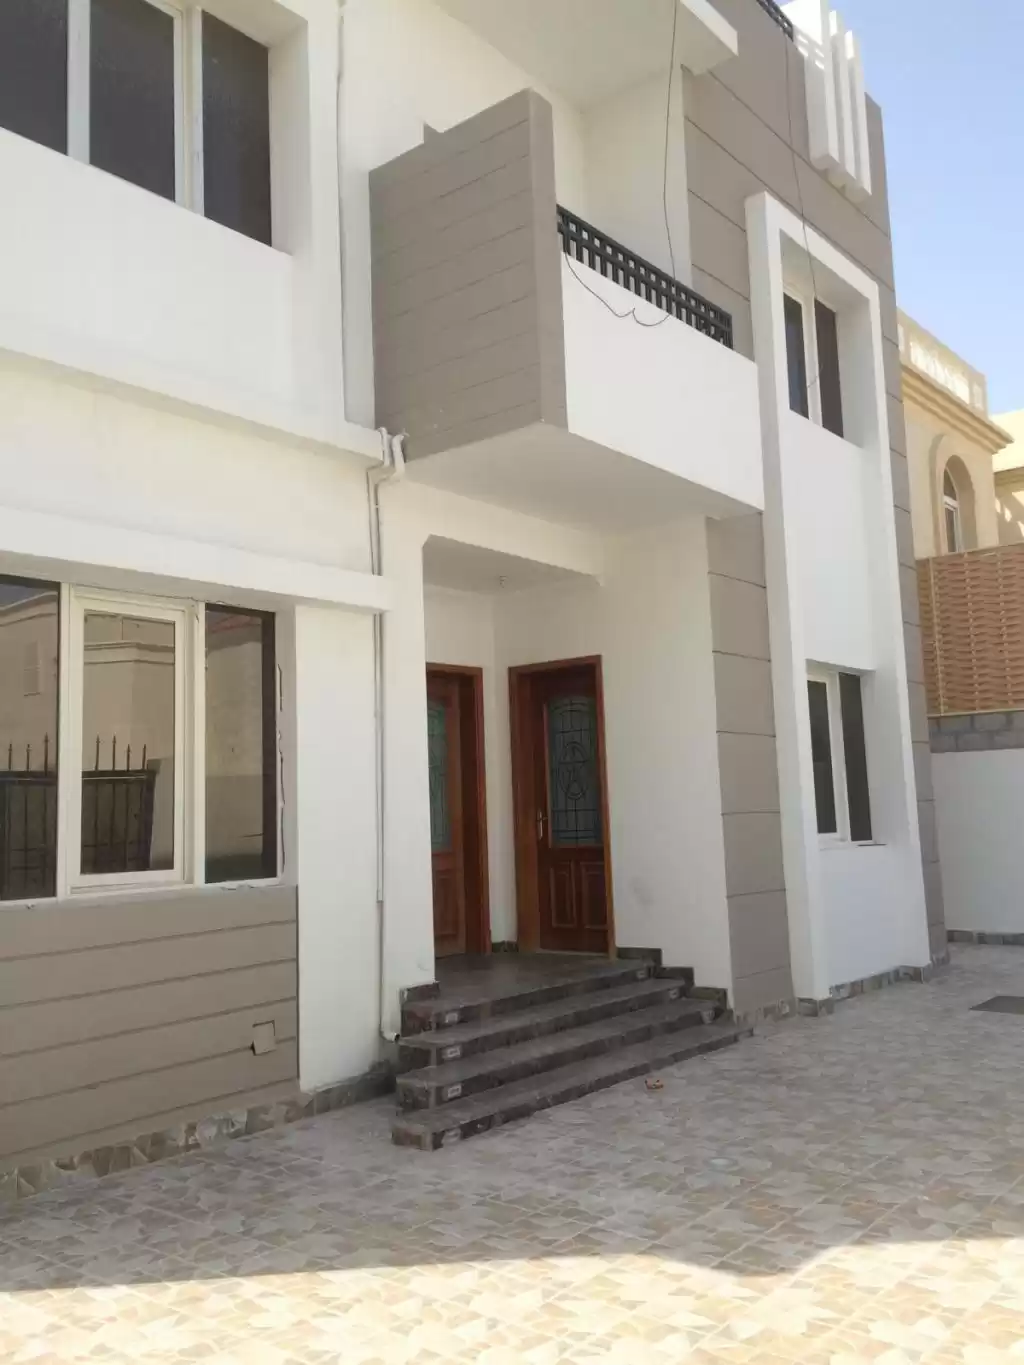 Résidentiel Propriété prête Studio U / f Appartement  a louer au Al-Sadd , Doha #12956 - 1  image 